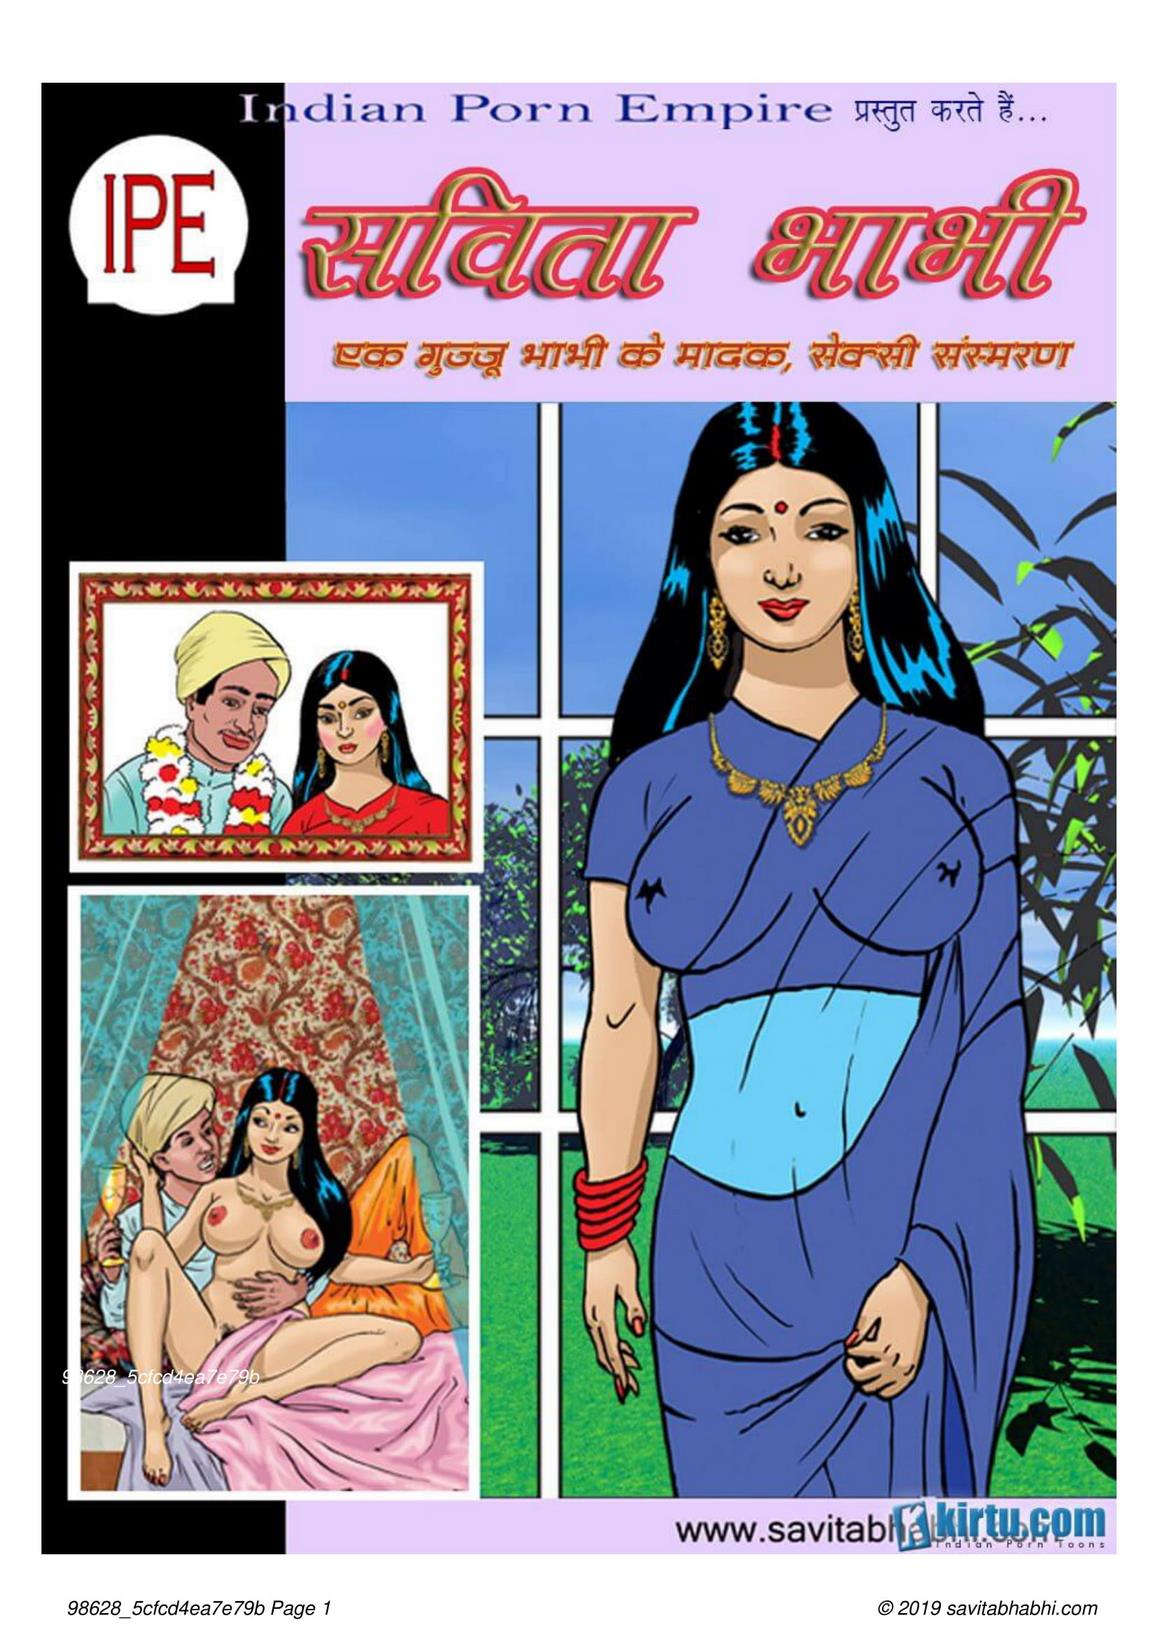 Savita Bhabhi Episode 01 Hindi - Bra Bechne Aaya (ब्रा बेचने आया) - 15 - FSIComics